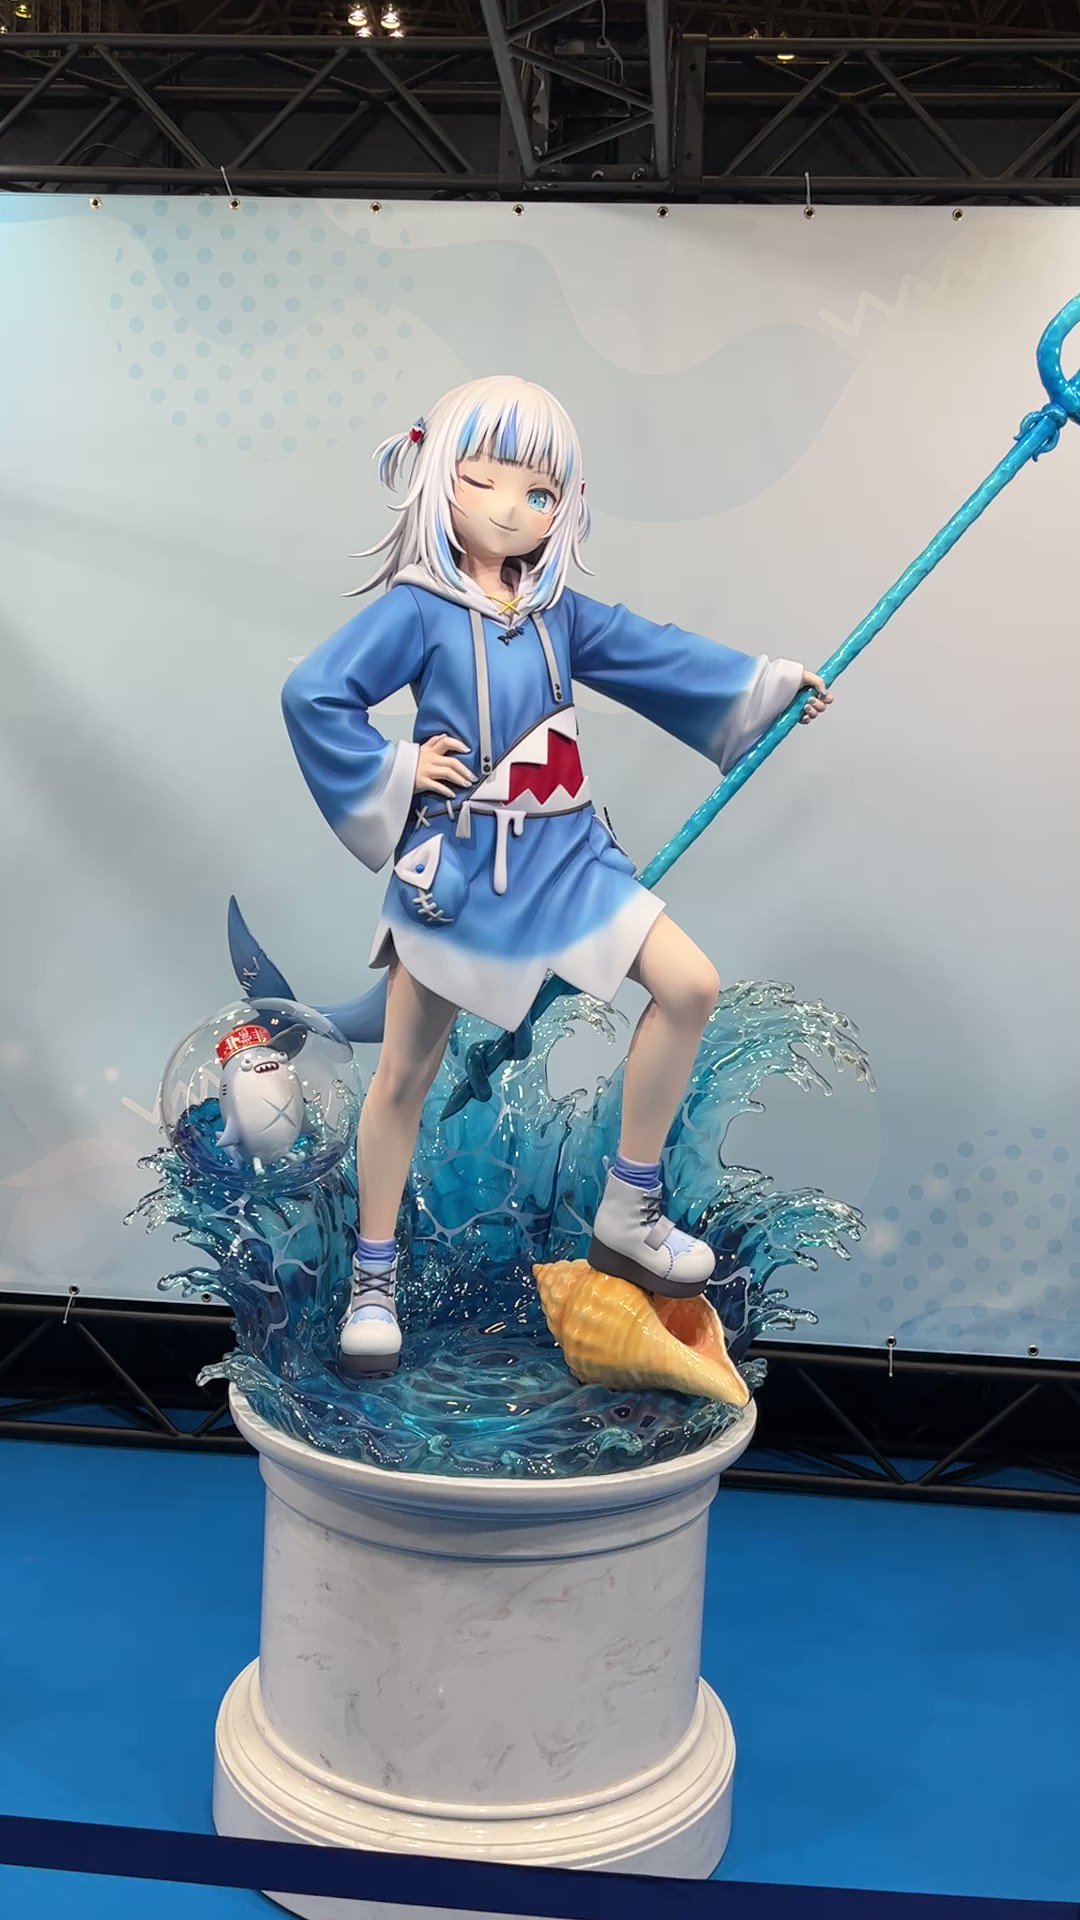 Buy Anime Gokou Ruri Kuroneko 18 Scale Prepainted PVC Action Figure  Collectible Model Toy 18cm Retail Box Online at Low Prices in India   Amazonin